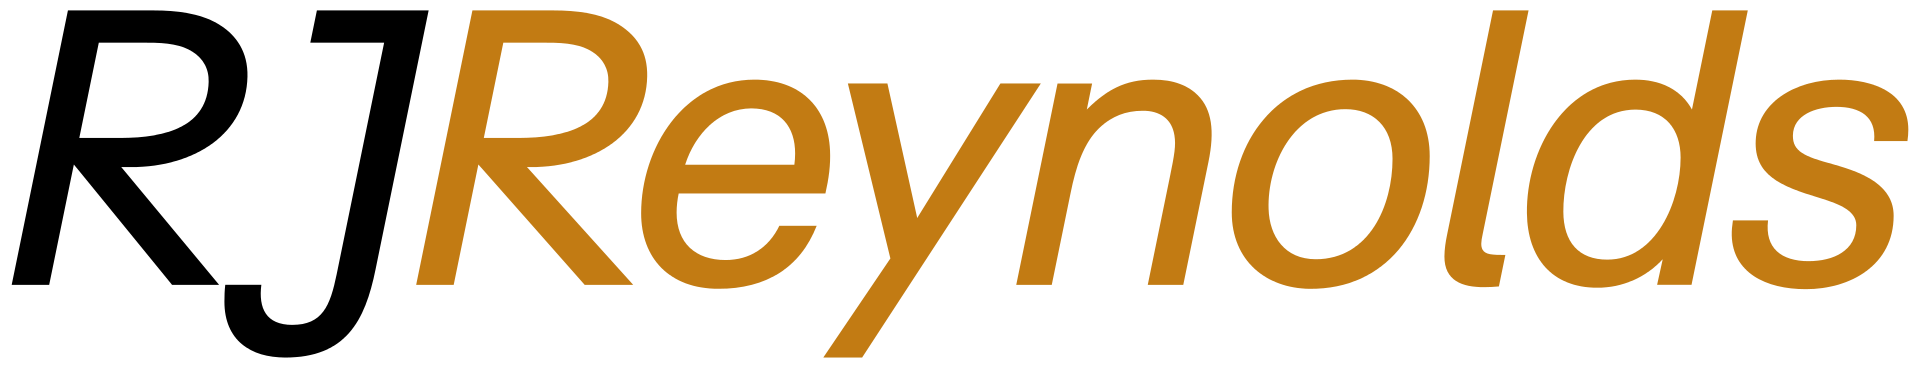 R.J. Reynolds Tobacco Company Logo